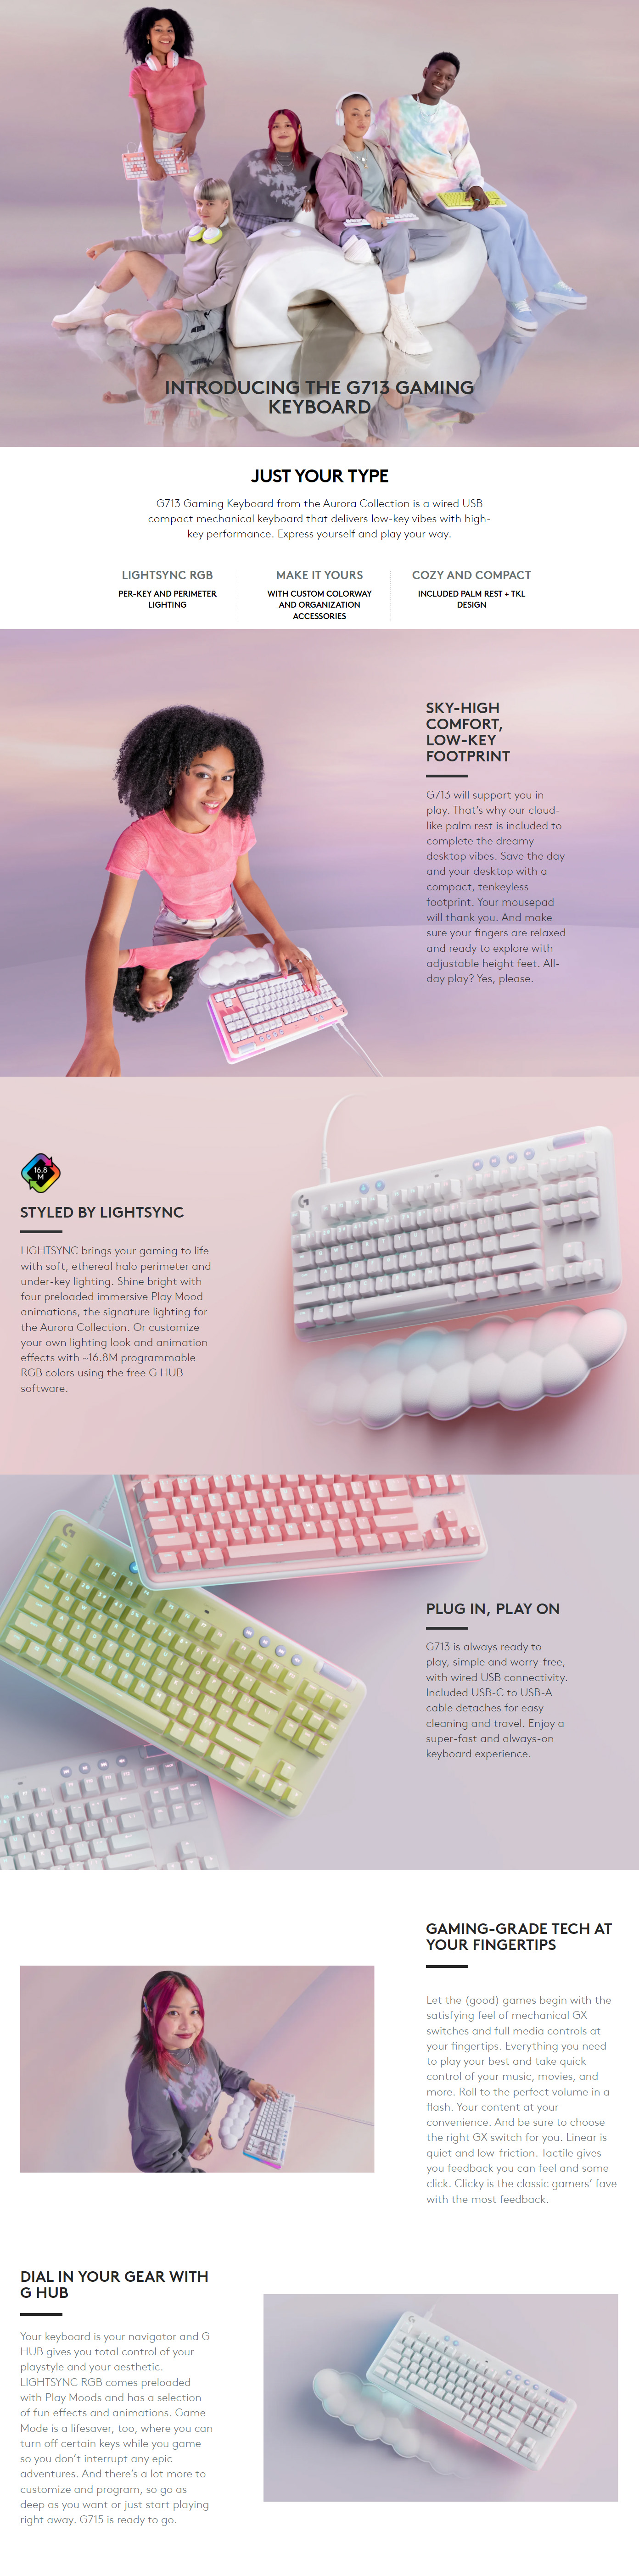 Keyboards-Logitech-G713-Linear-Gaming-Keyboard-1